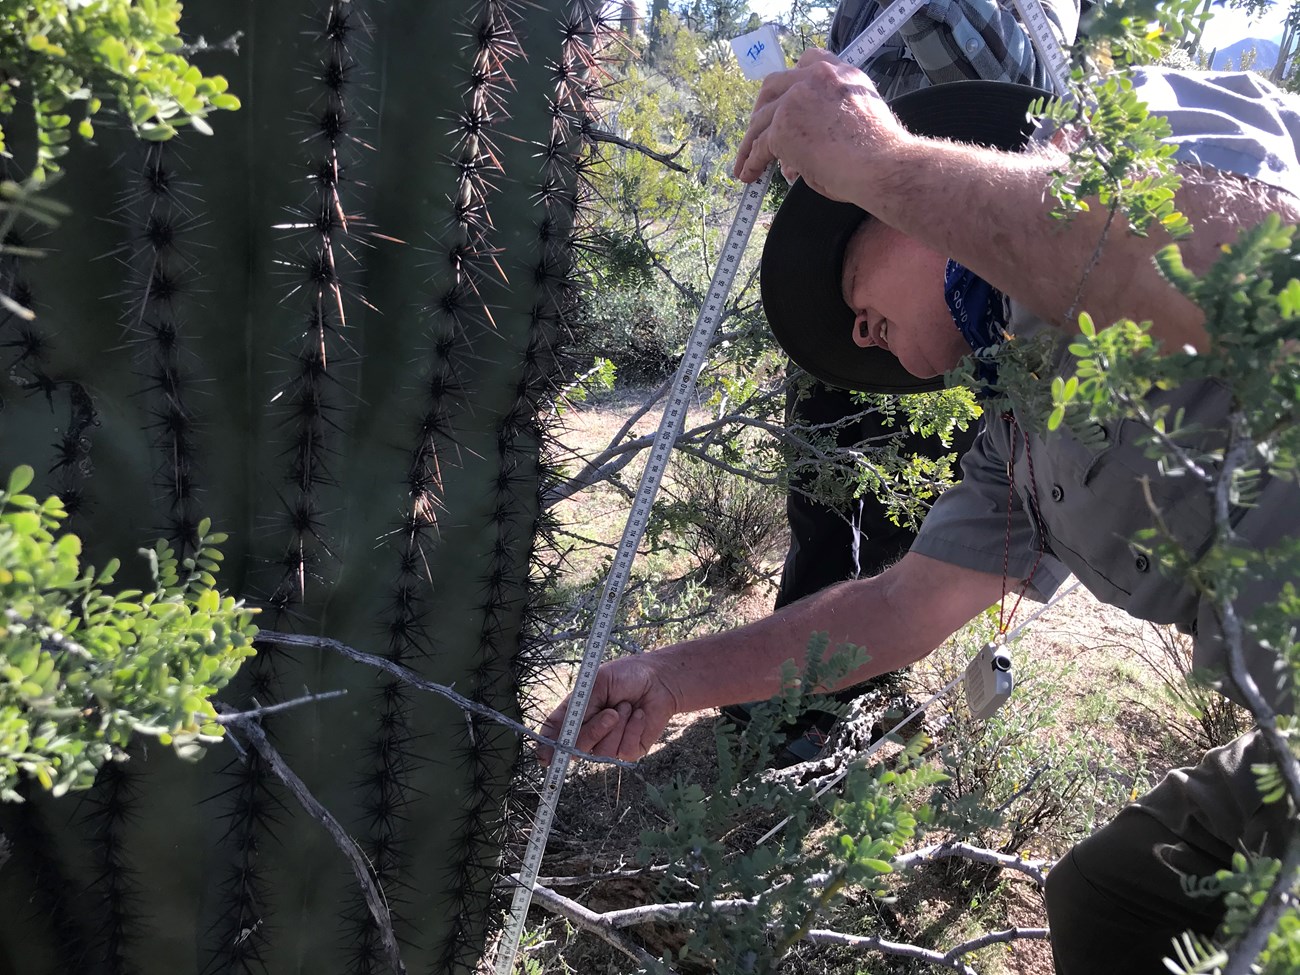 Volunteer crouches to measure saguaro tucked in vegetation